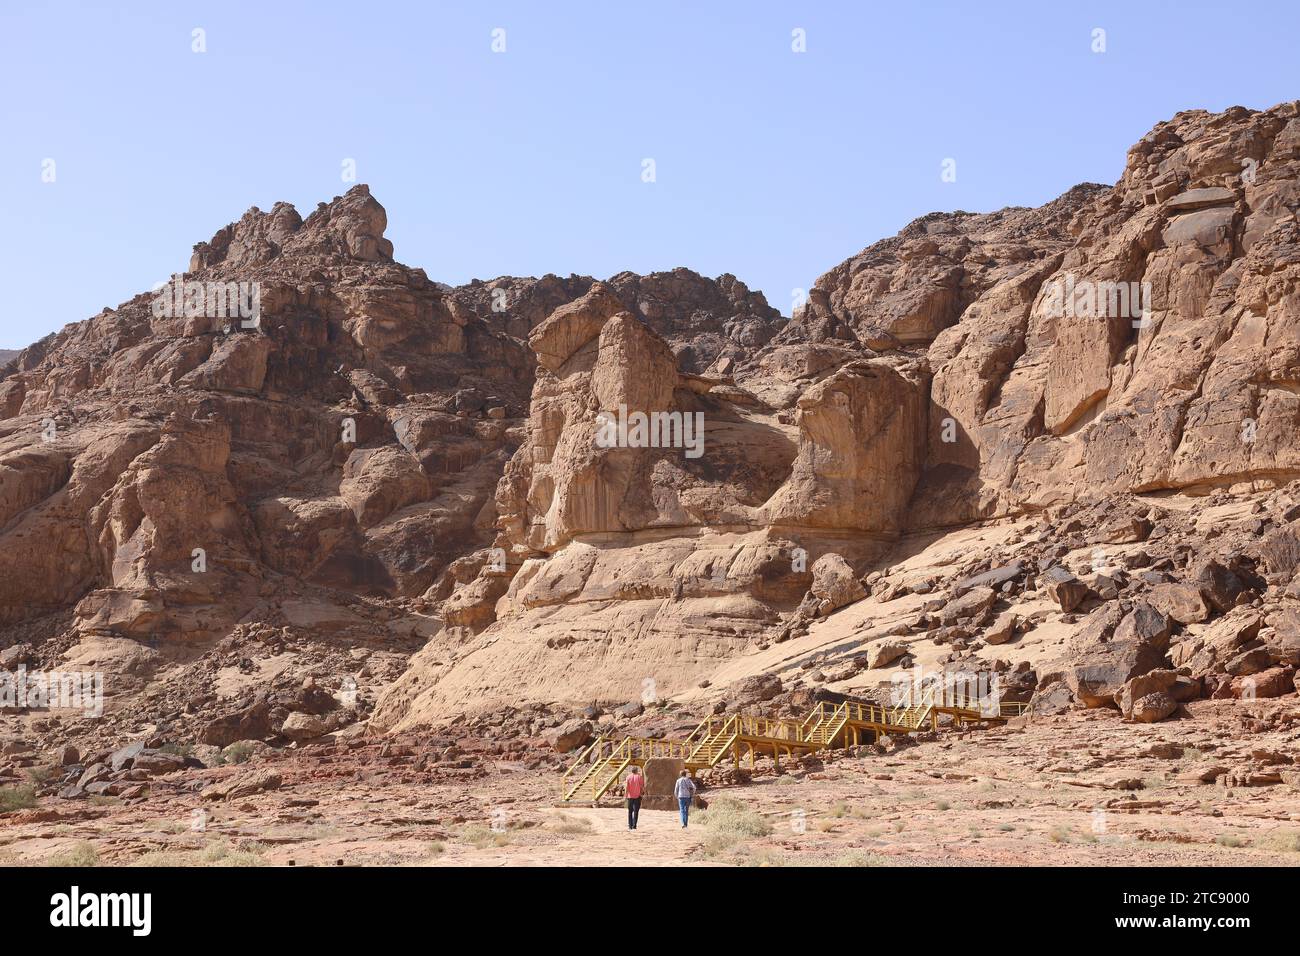 Turisti al monte Umm Sinman in Arabia Saudita Foto Stock